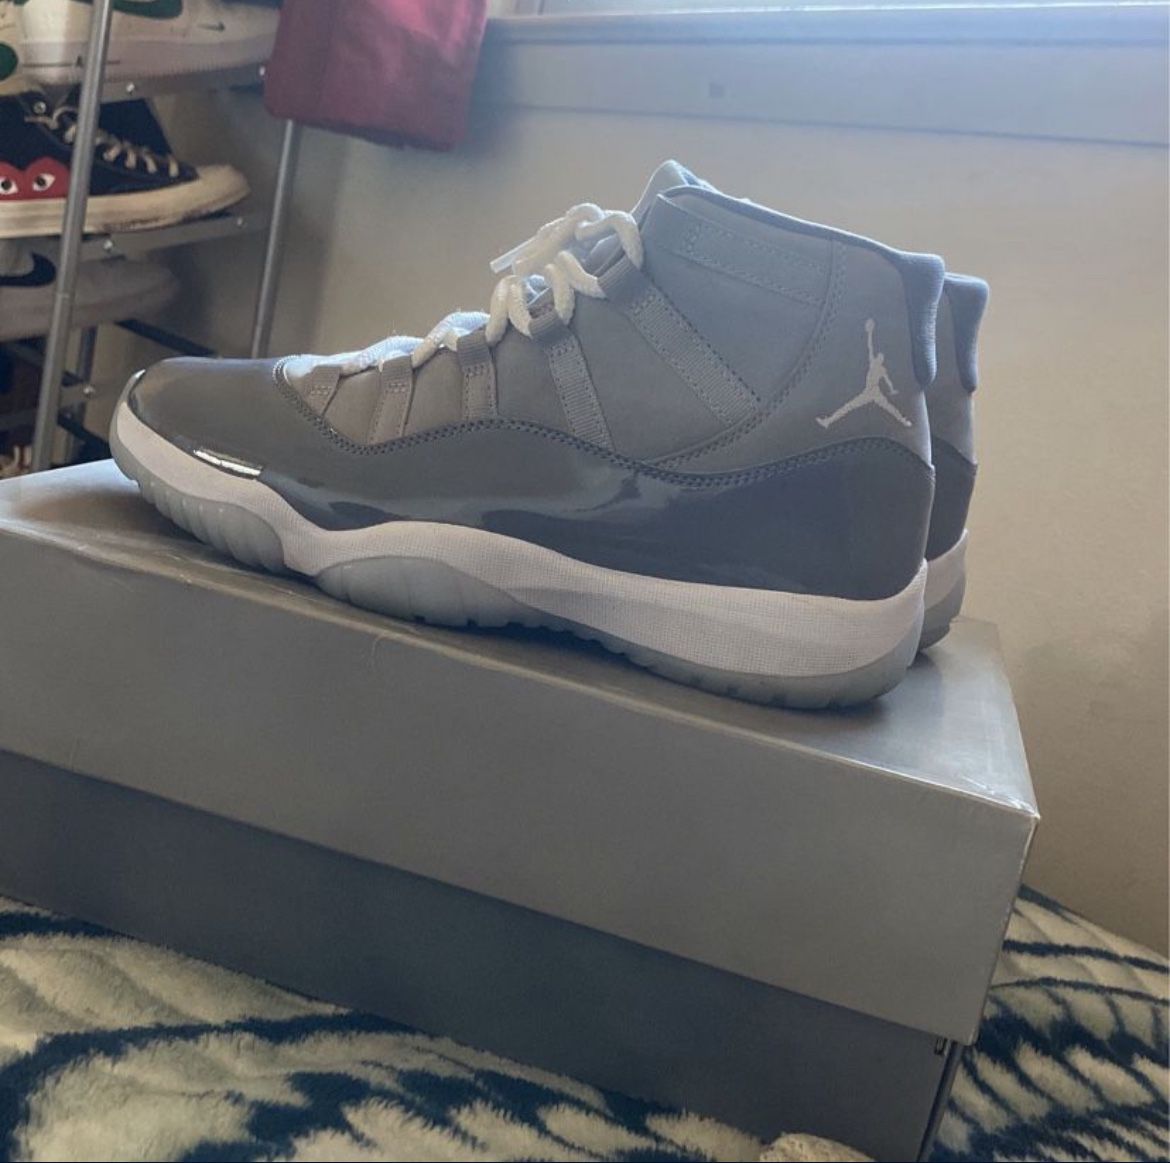 Jordan 11 grey